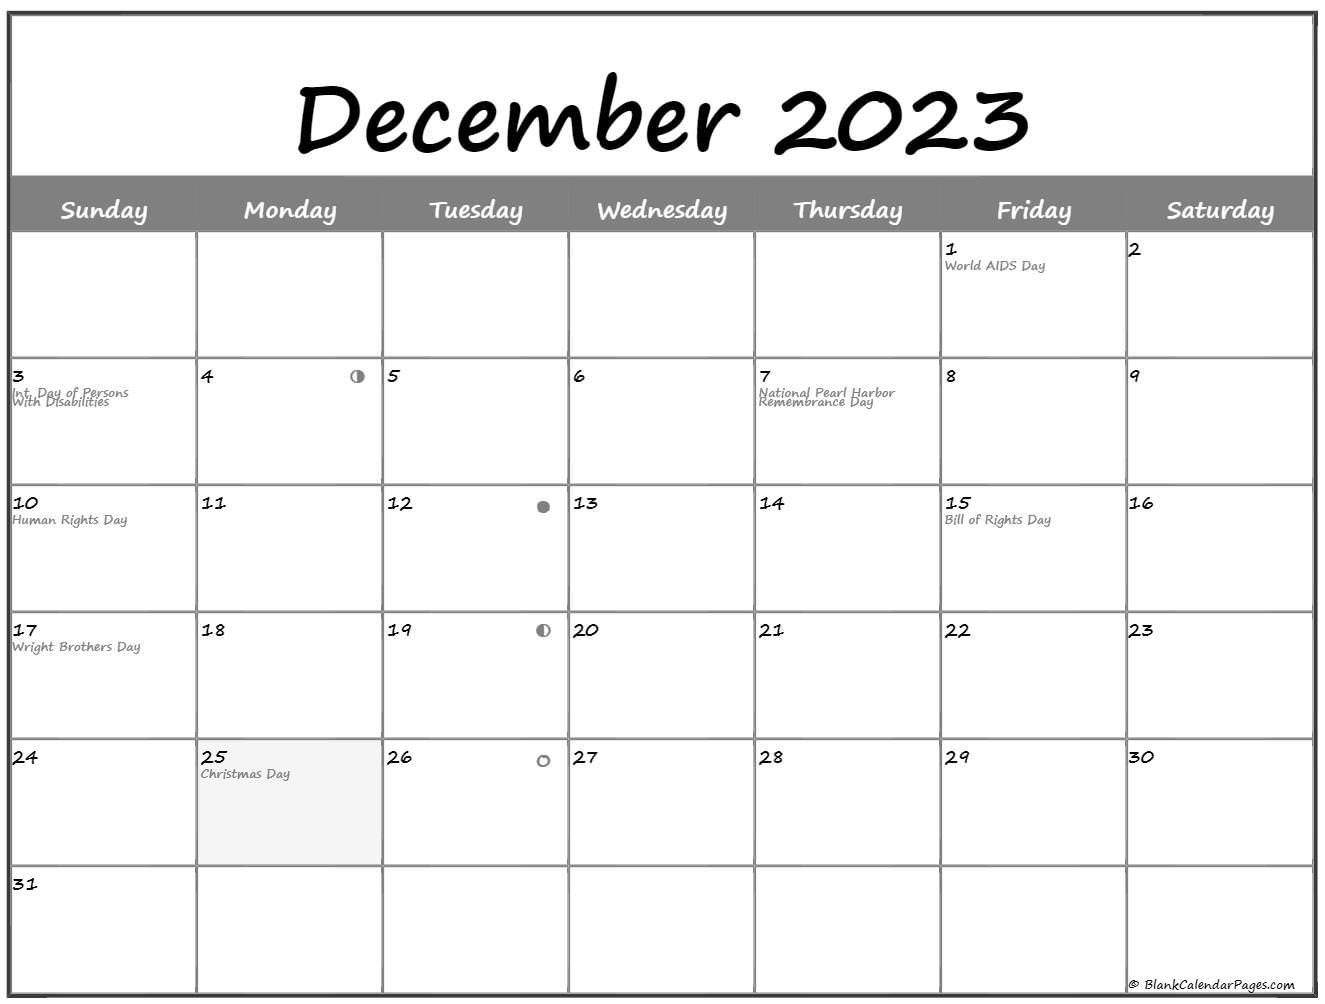 Nsu Winter 2023 Calendar - Customize and Print